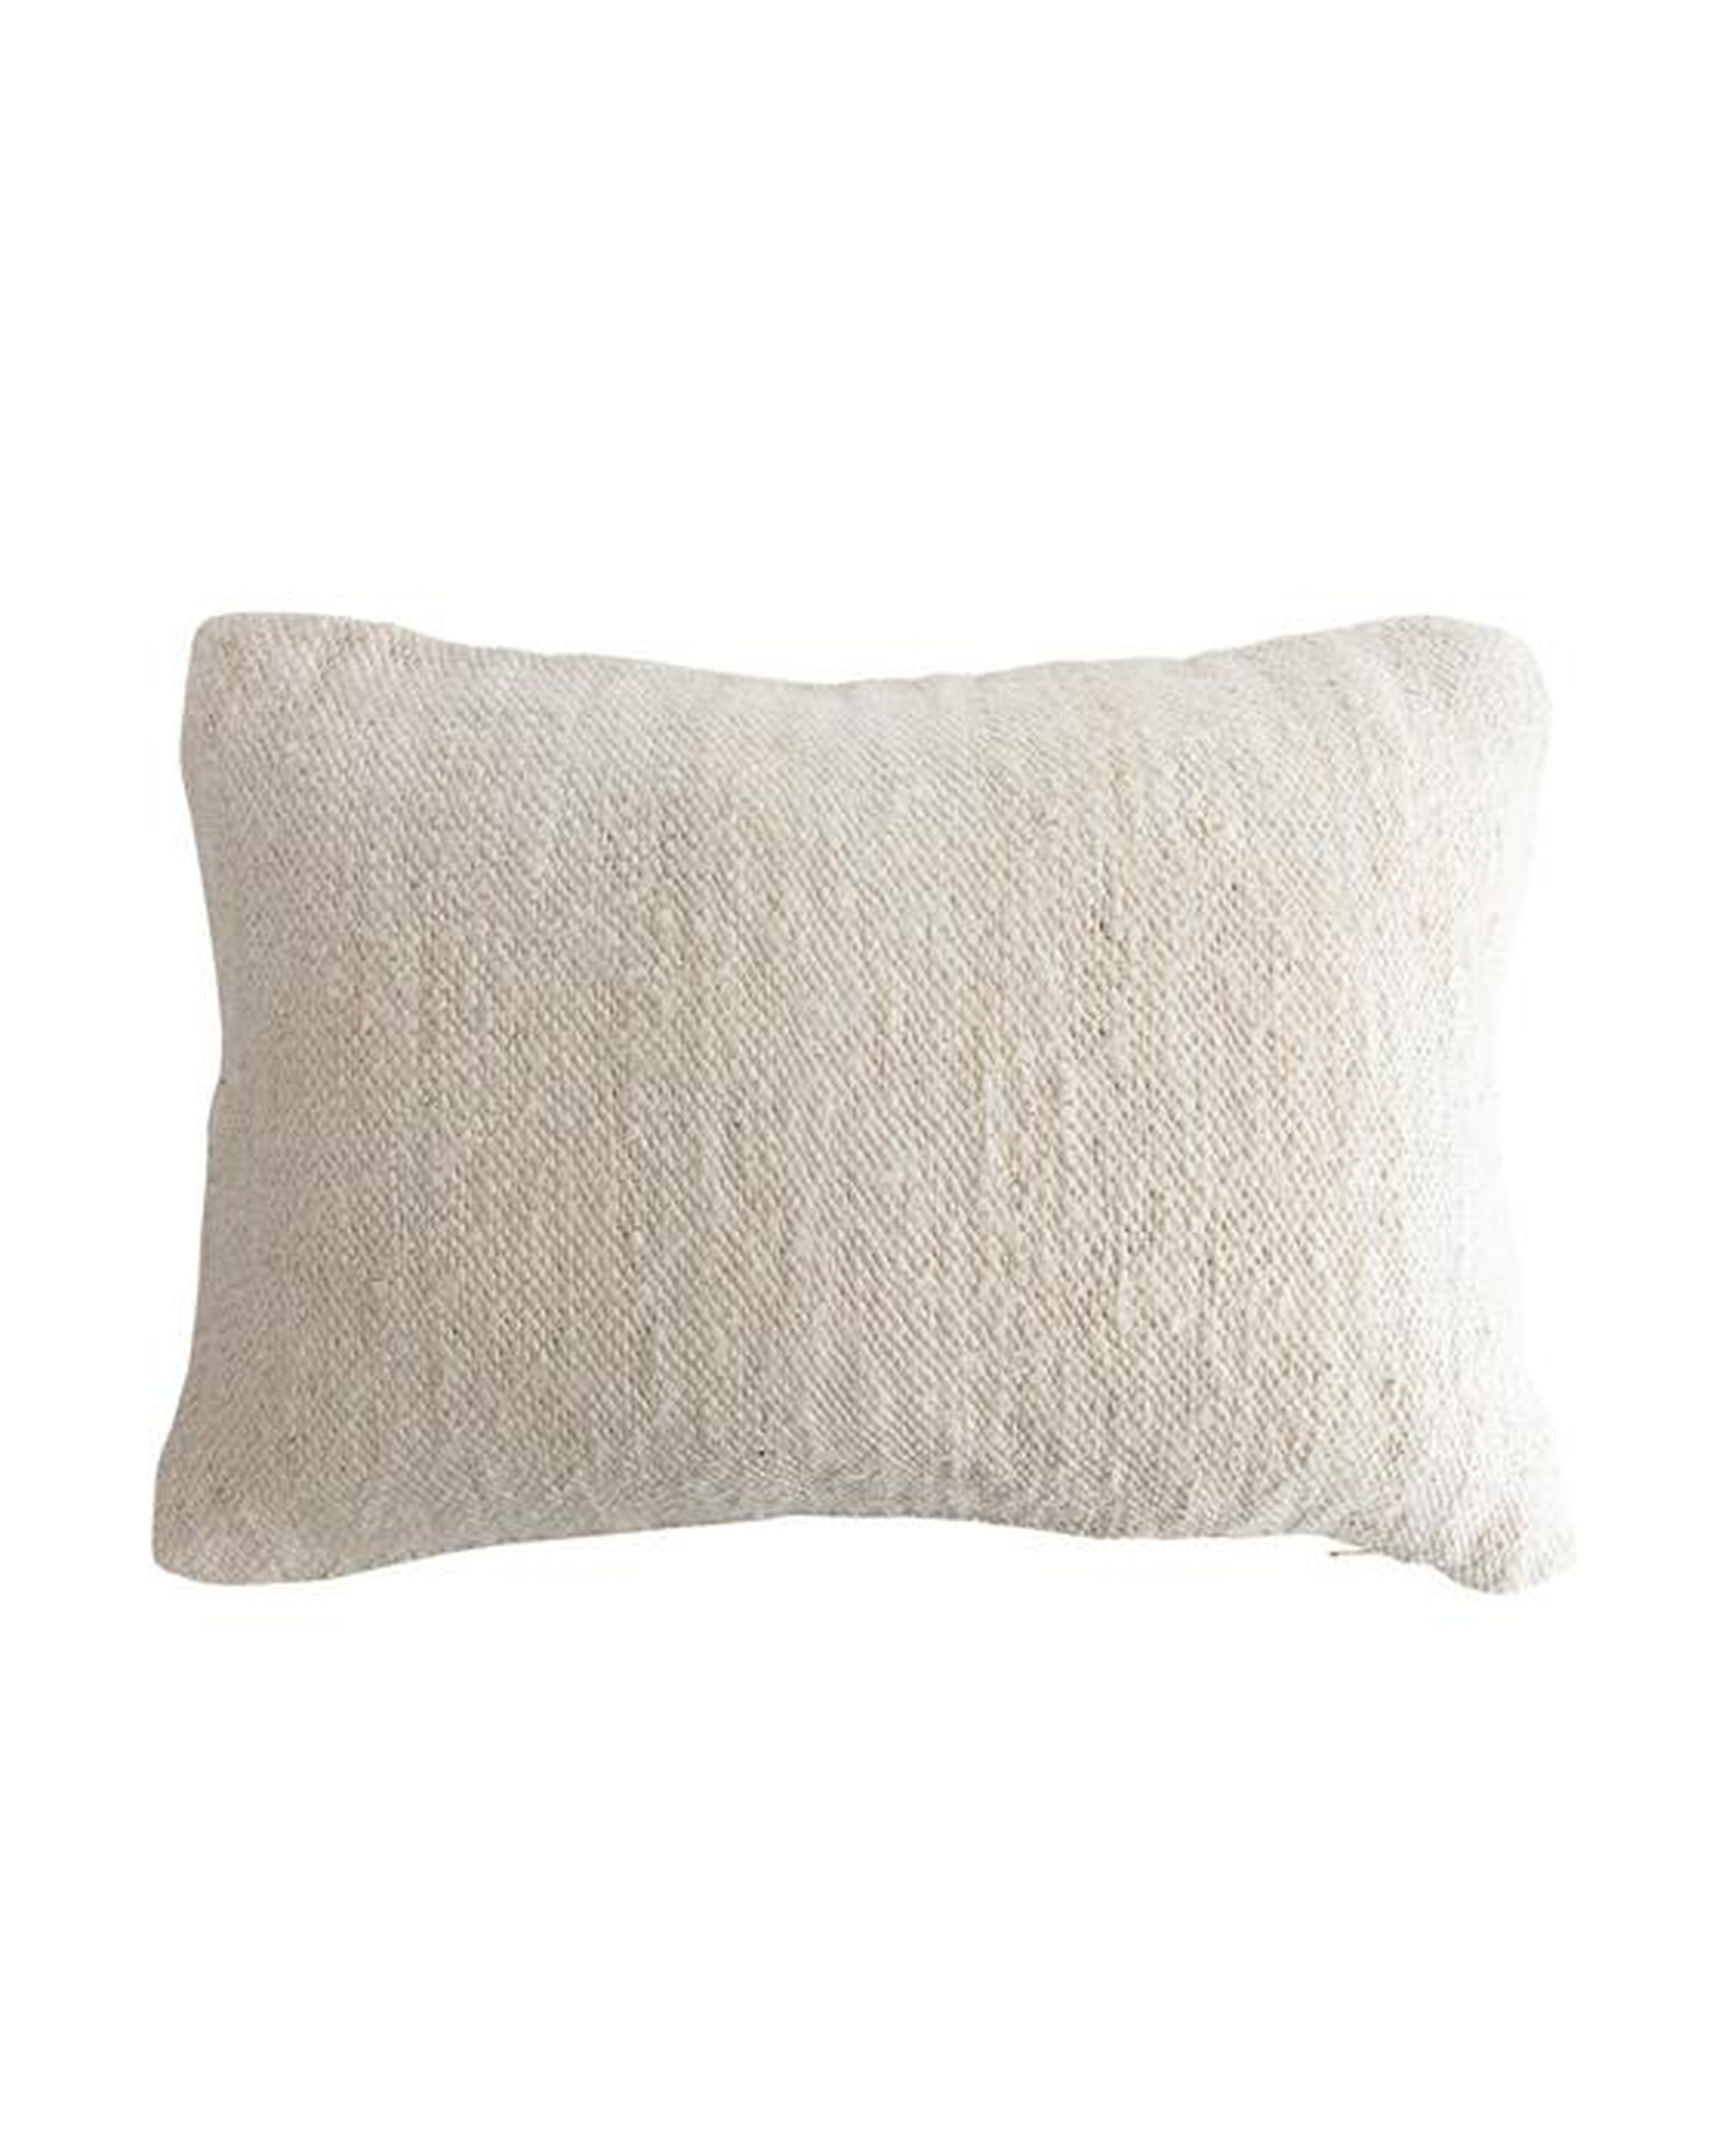 Tari Pillow Cover - McGee & Co.